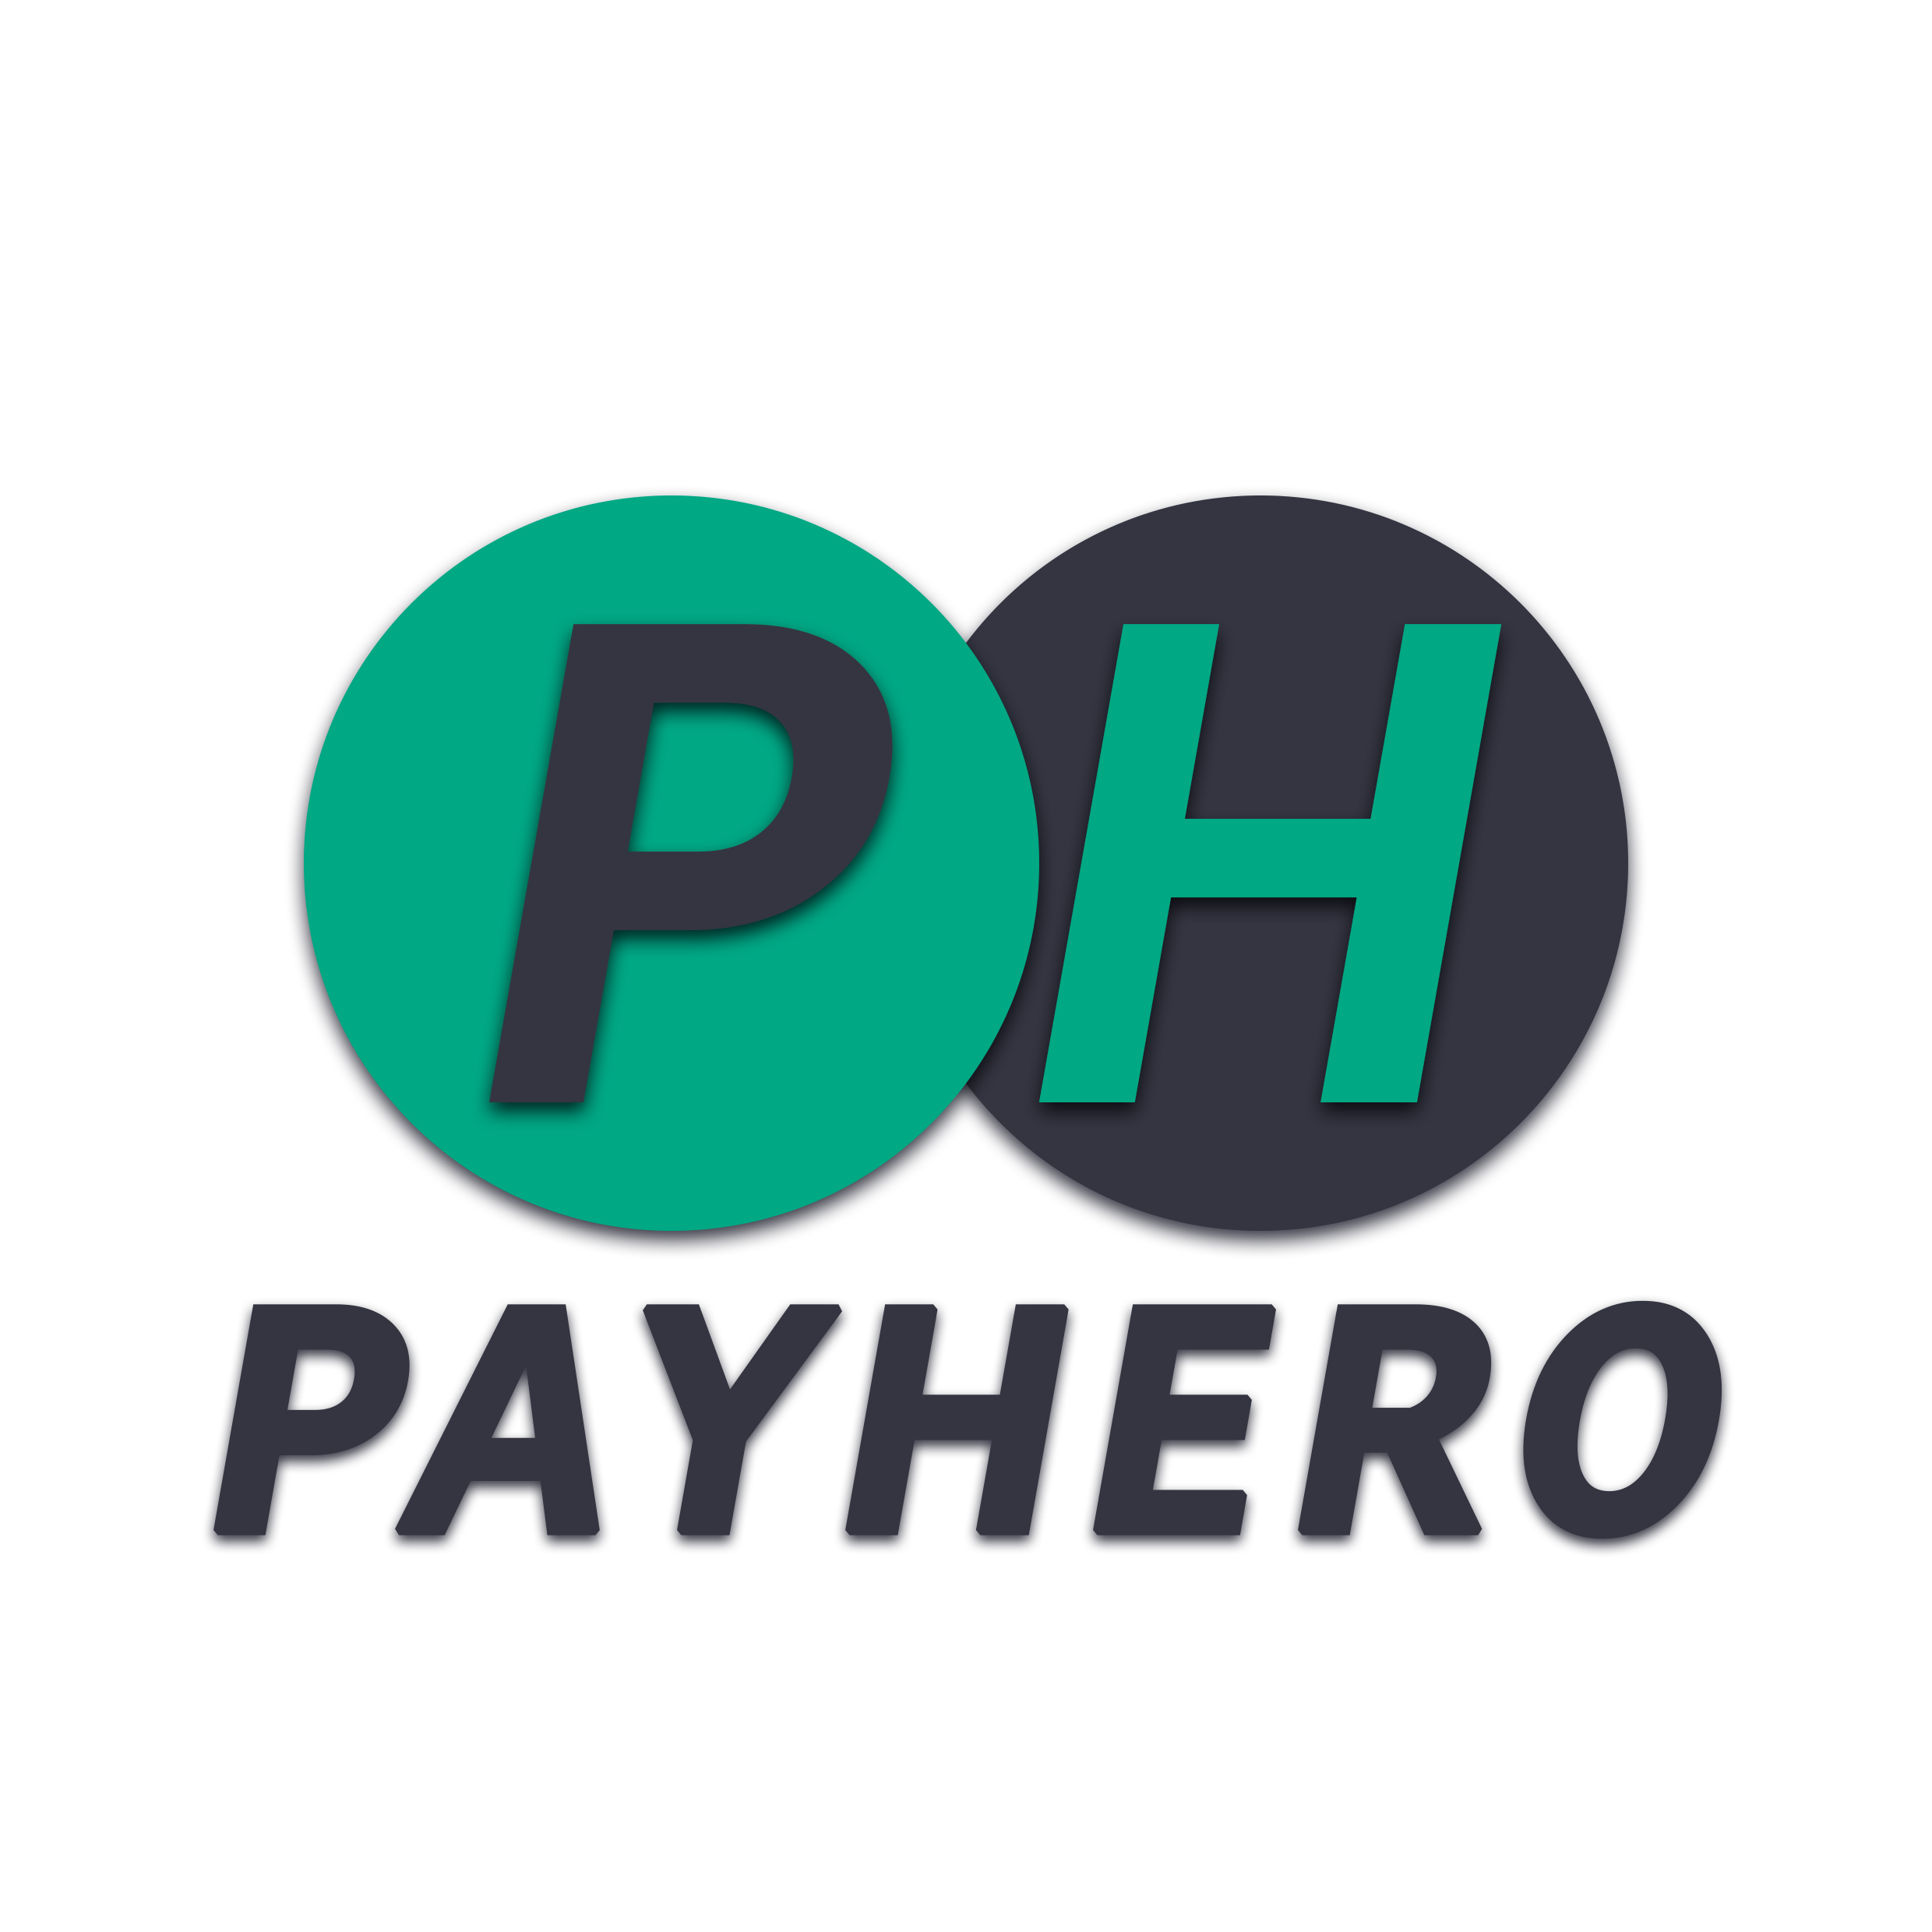 Pay Hero Kenya